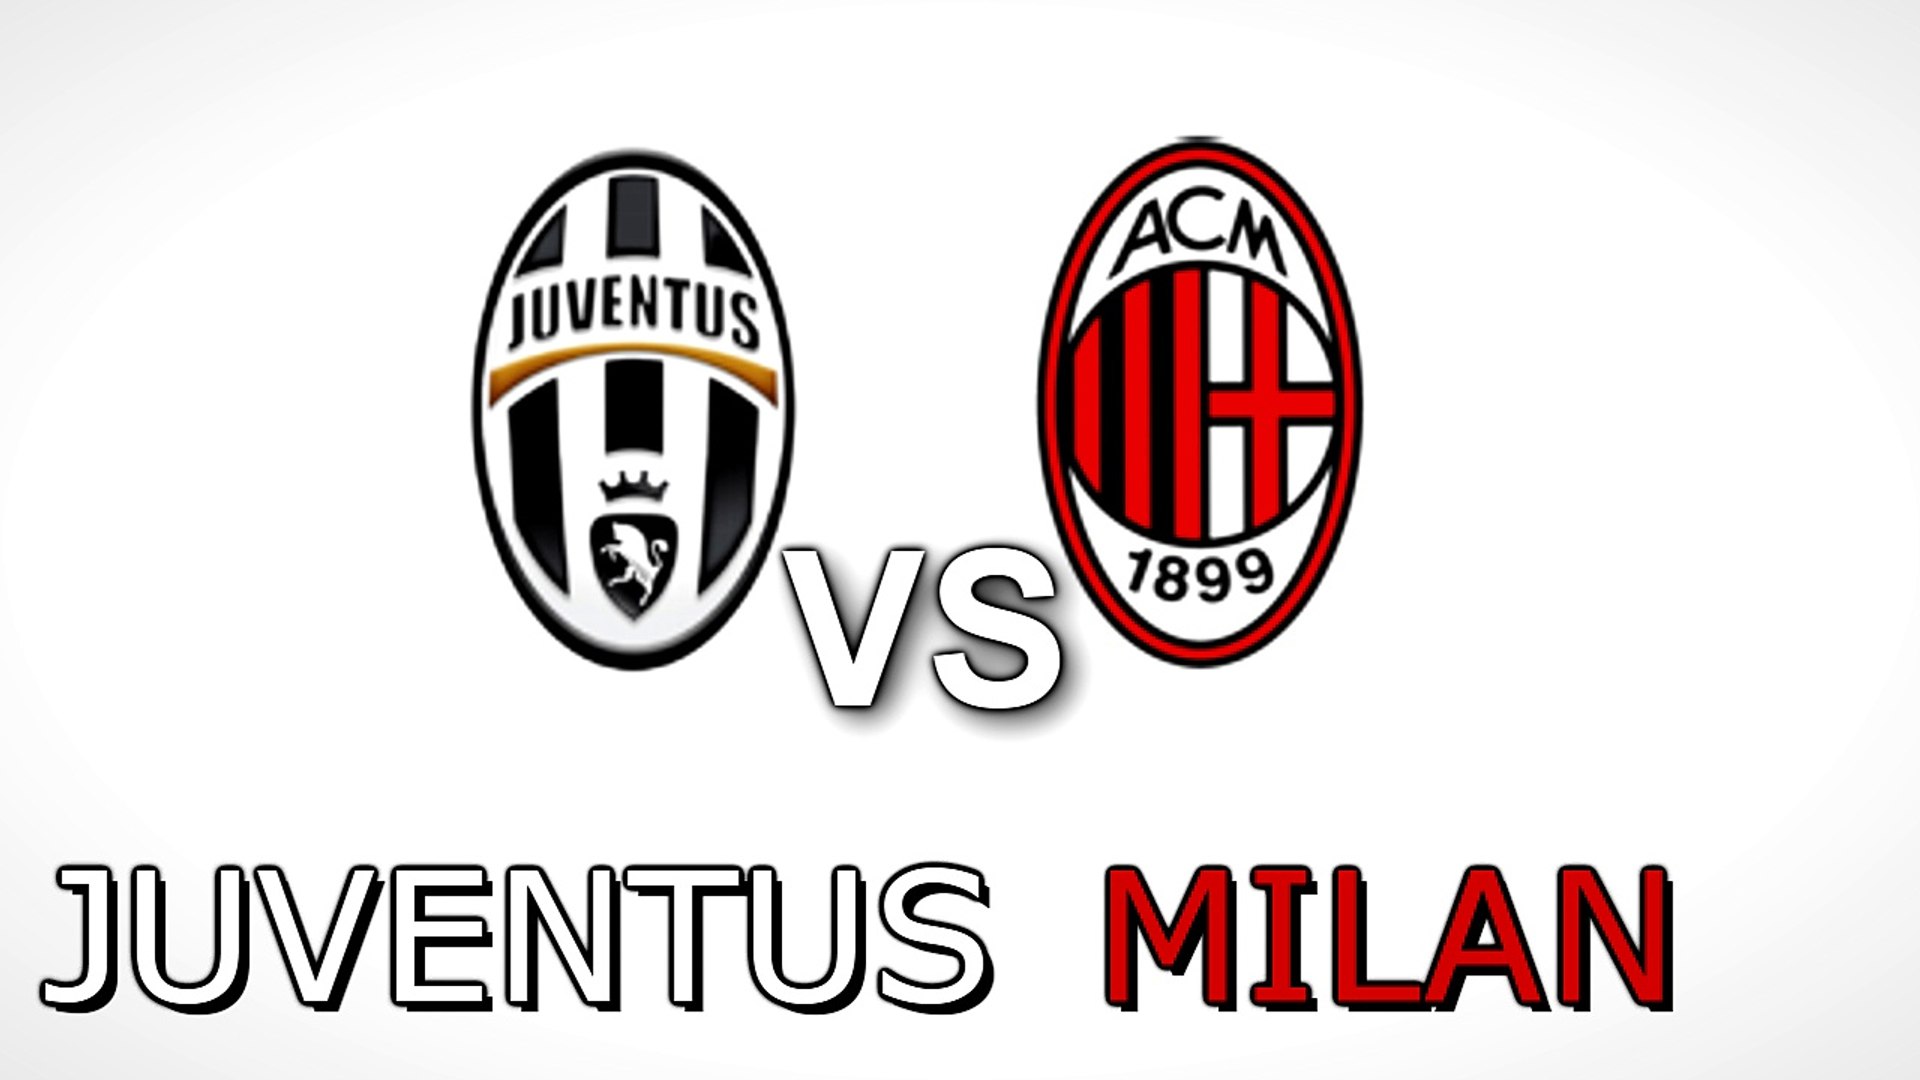 Juventus-Milan (Serie A) | Link alla Diretta Streaming - Video Dailymotion